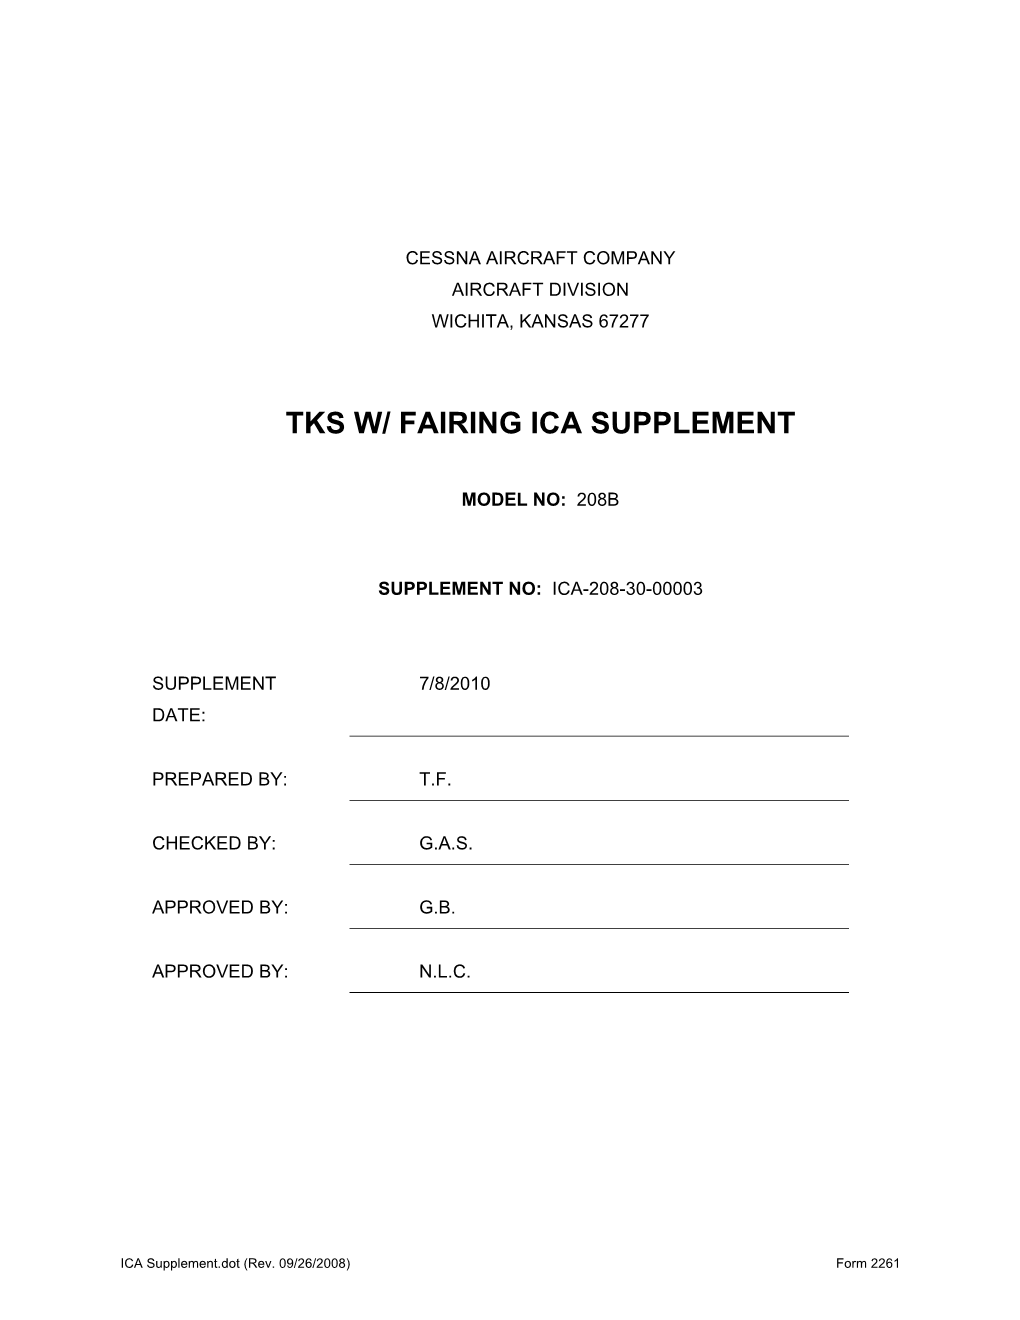 ICA-208-30-00003 208B Fairing ICA Supplement